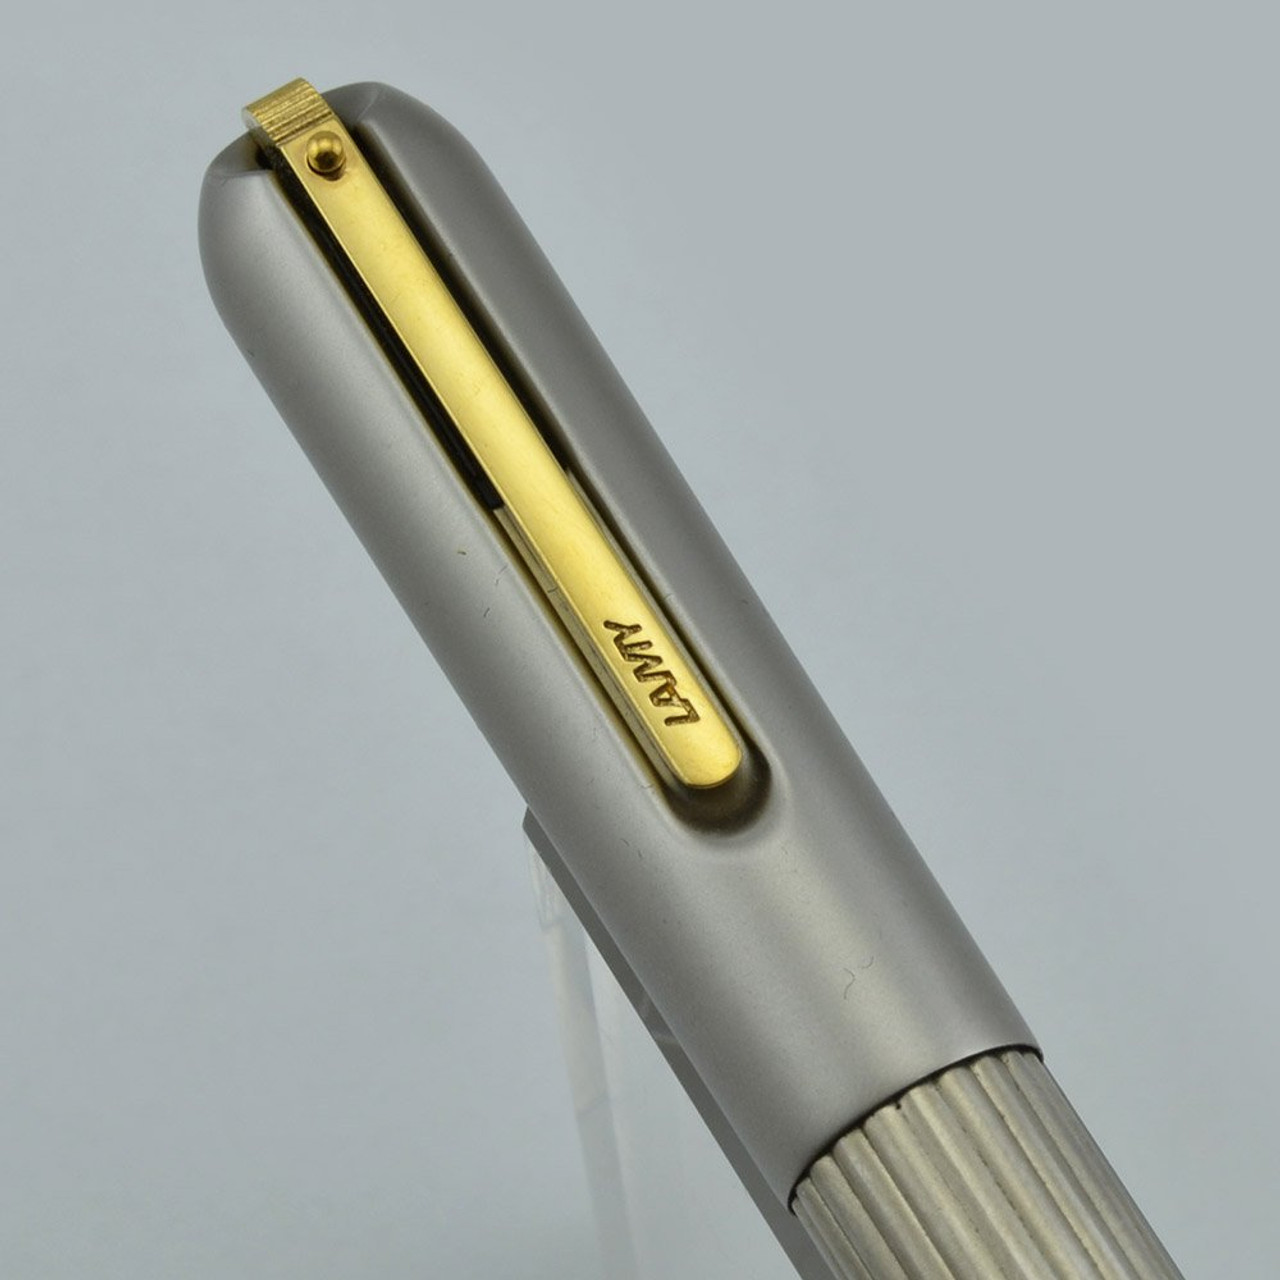 Lamy Persona Ballpoint Pen - Titanium Coated (Very Nice, Boxed)